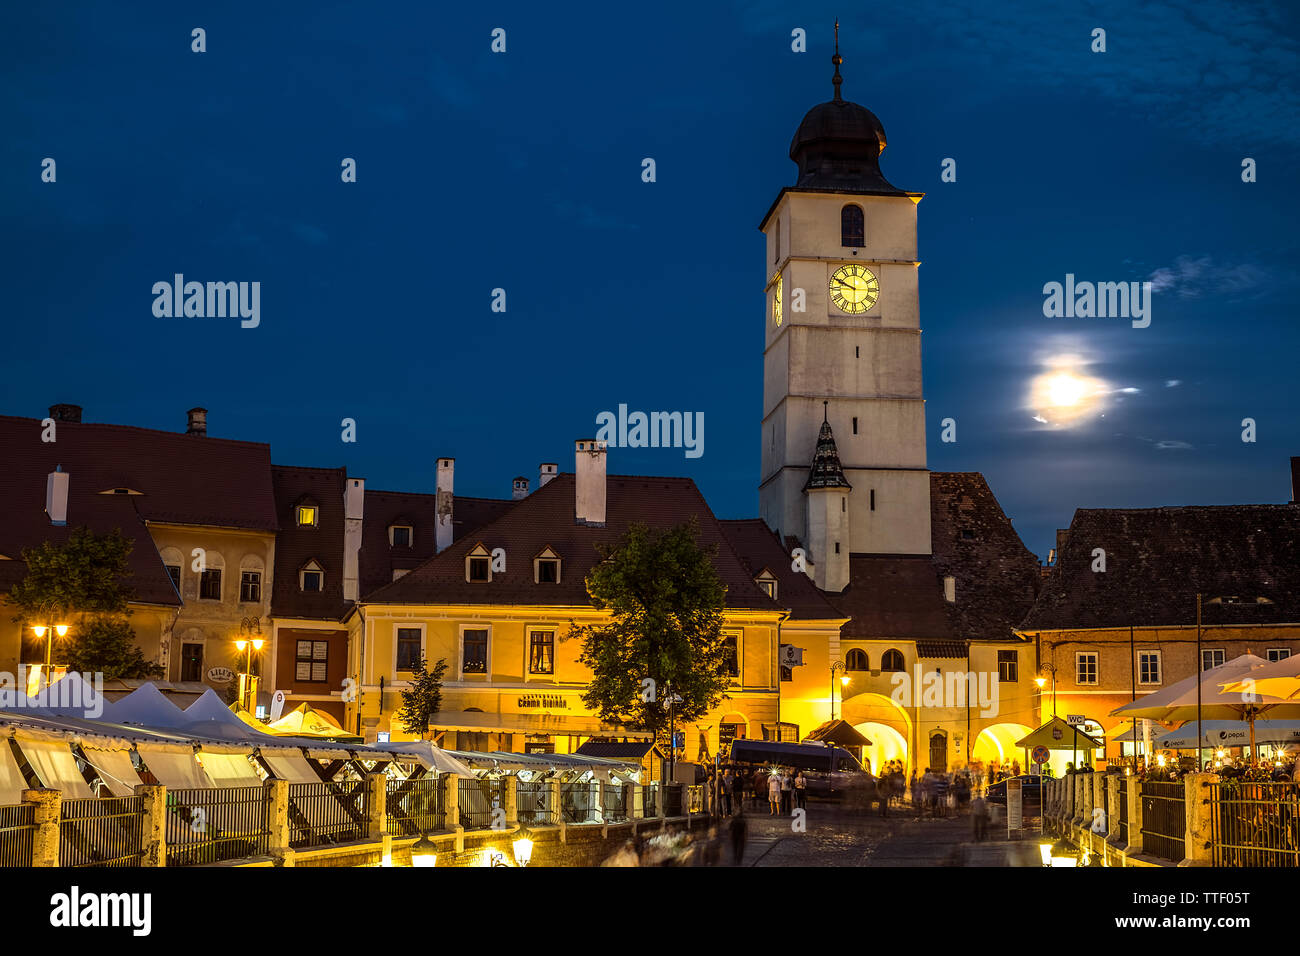 Sibiu City, Romania - 16 June 2019. Twilight image of Council Tower with moon and Small Square (Piata Mica) landmark of Sibiu town in Transylvania Rom Stock Photo